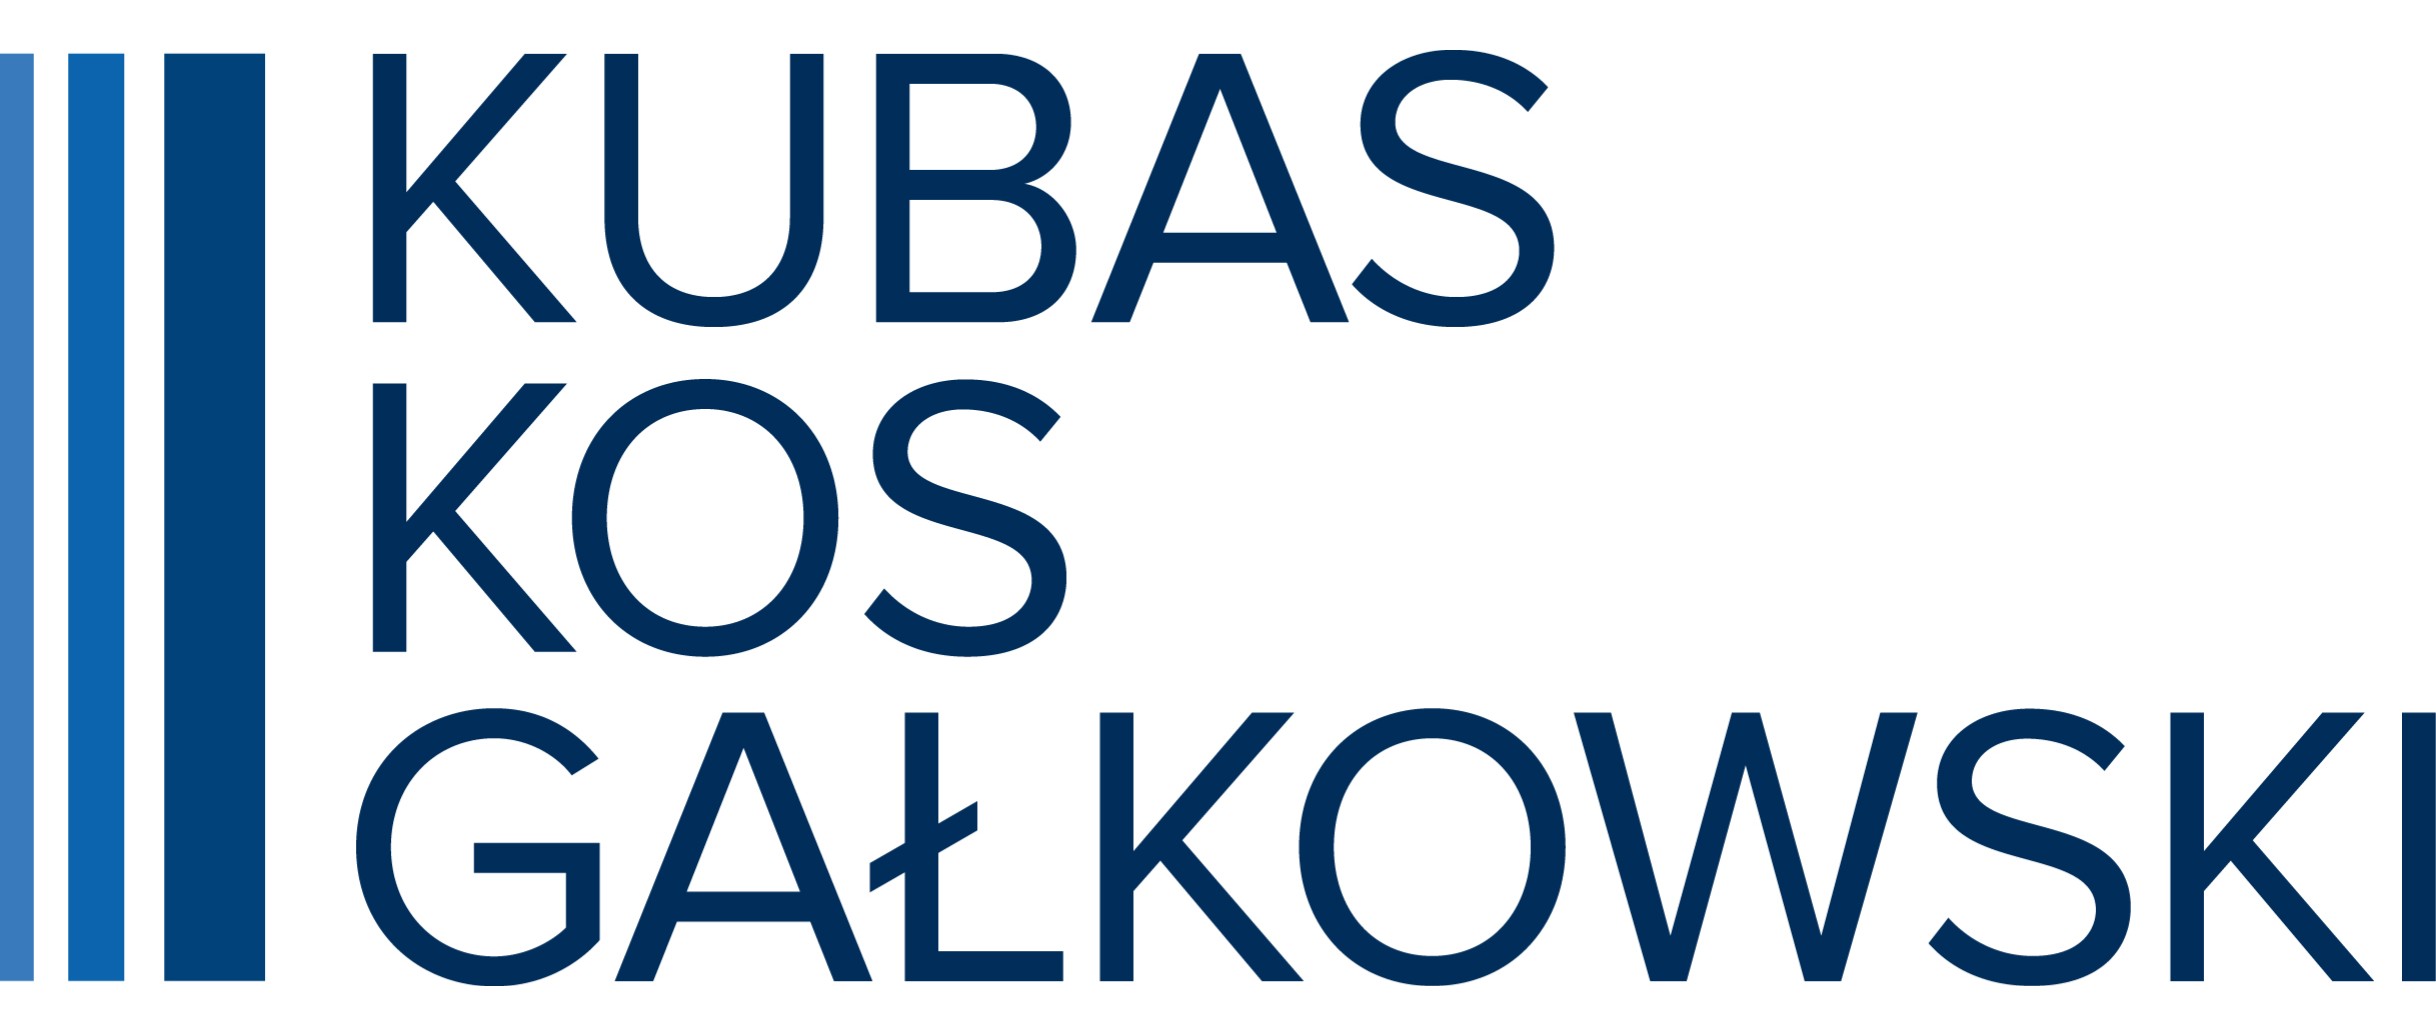 Kubas Kos Galkowski - Adwokaci sp.p sp.k.